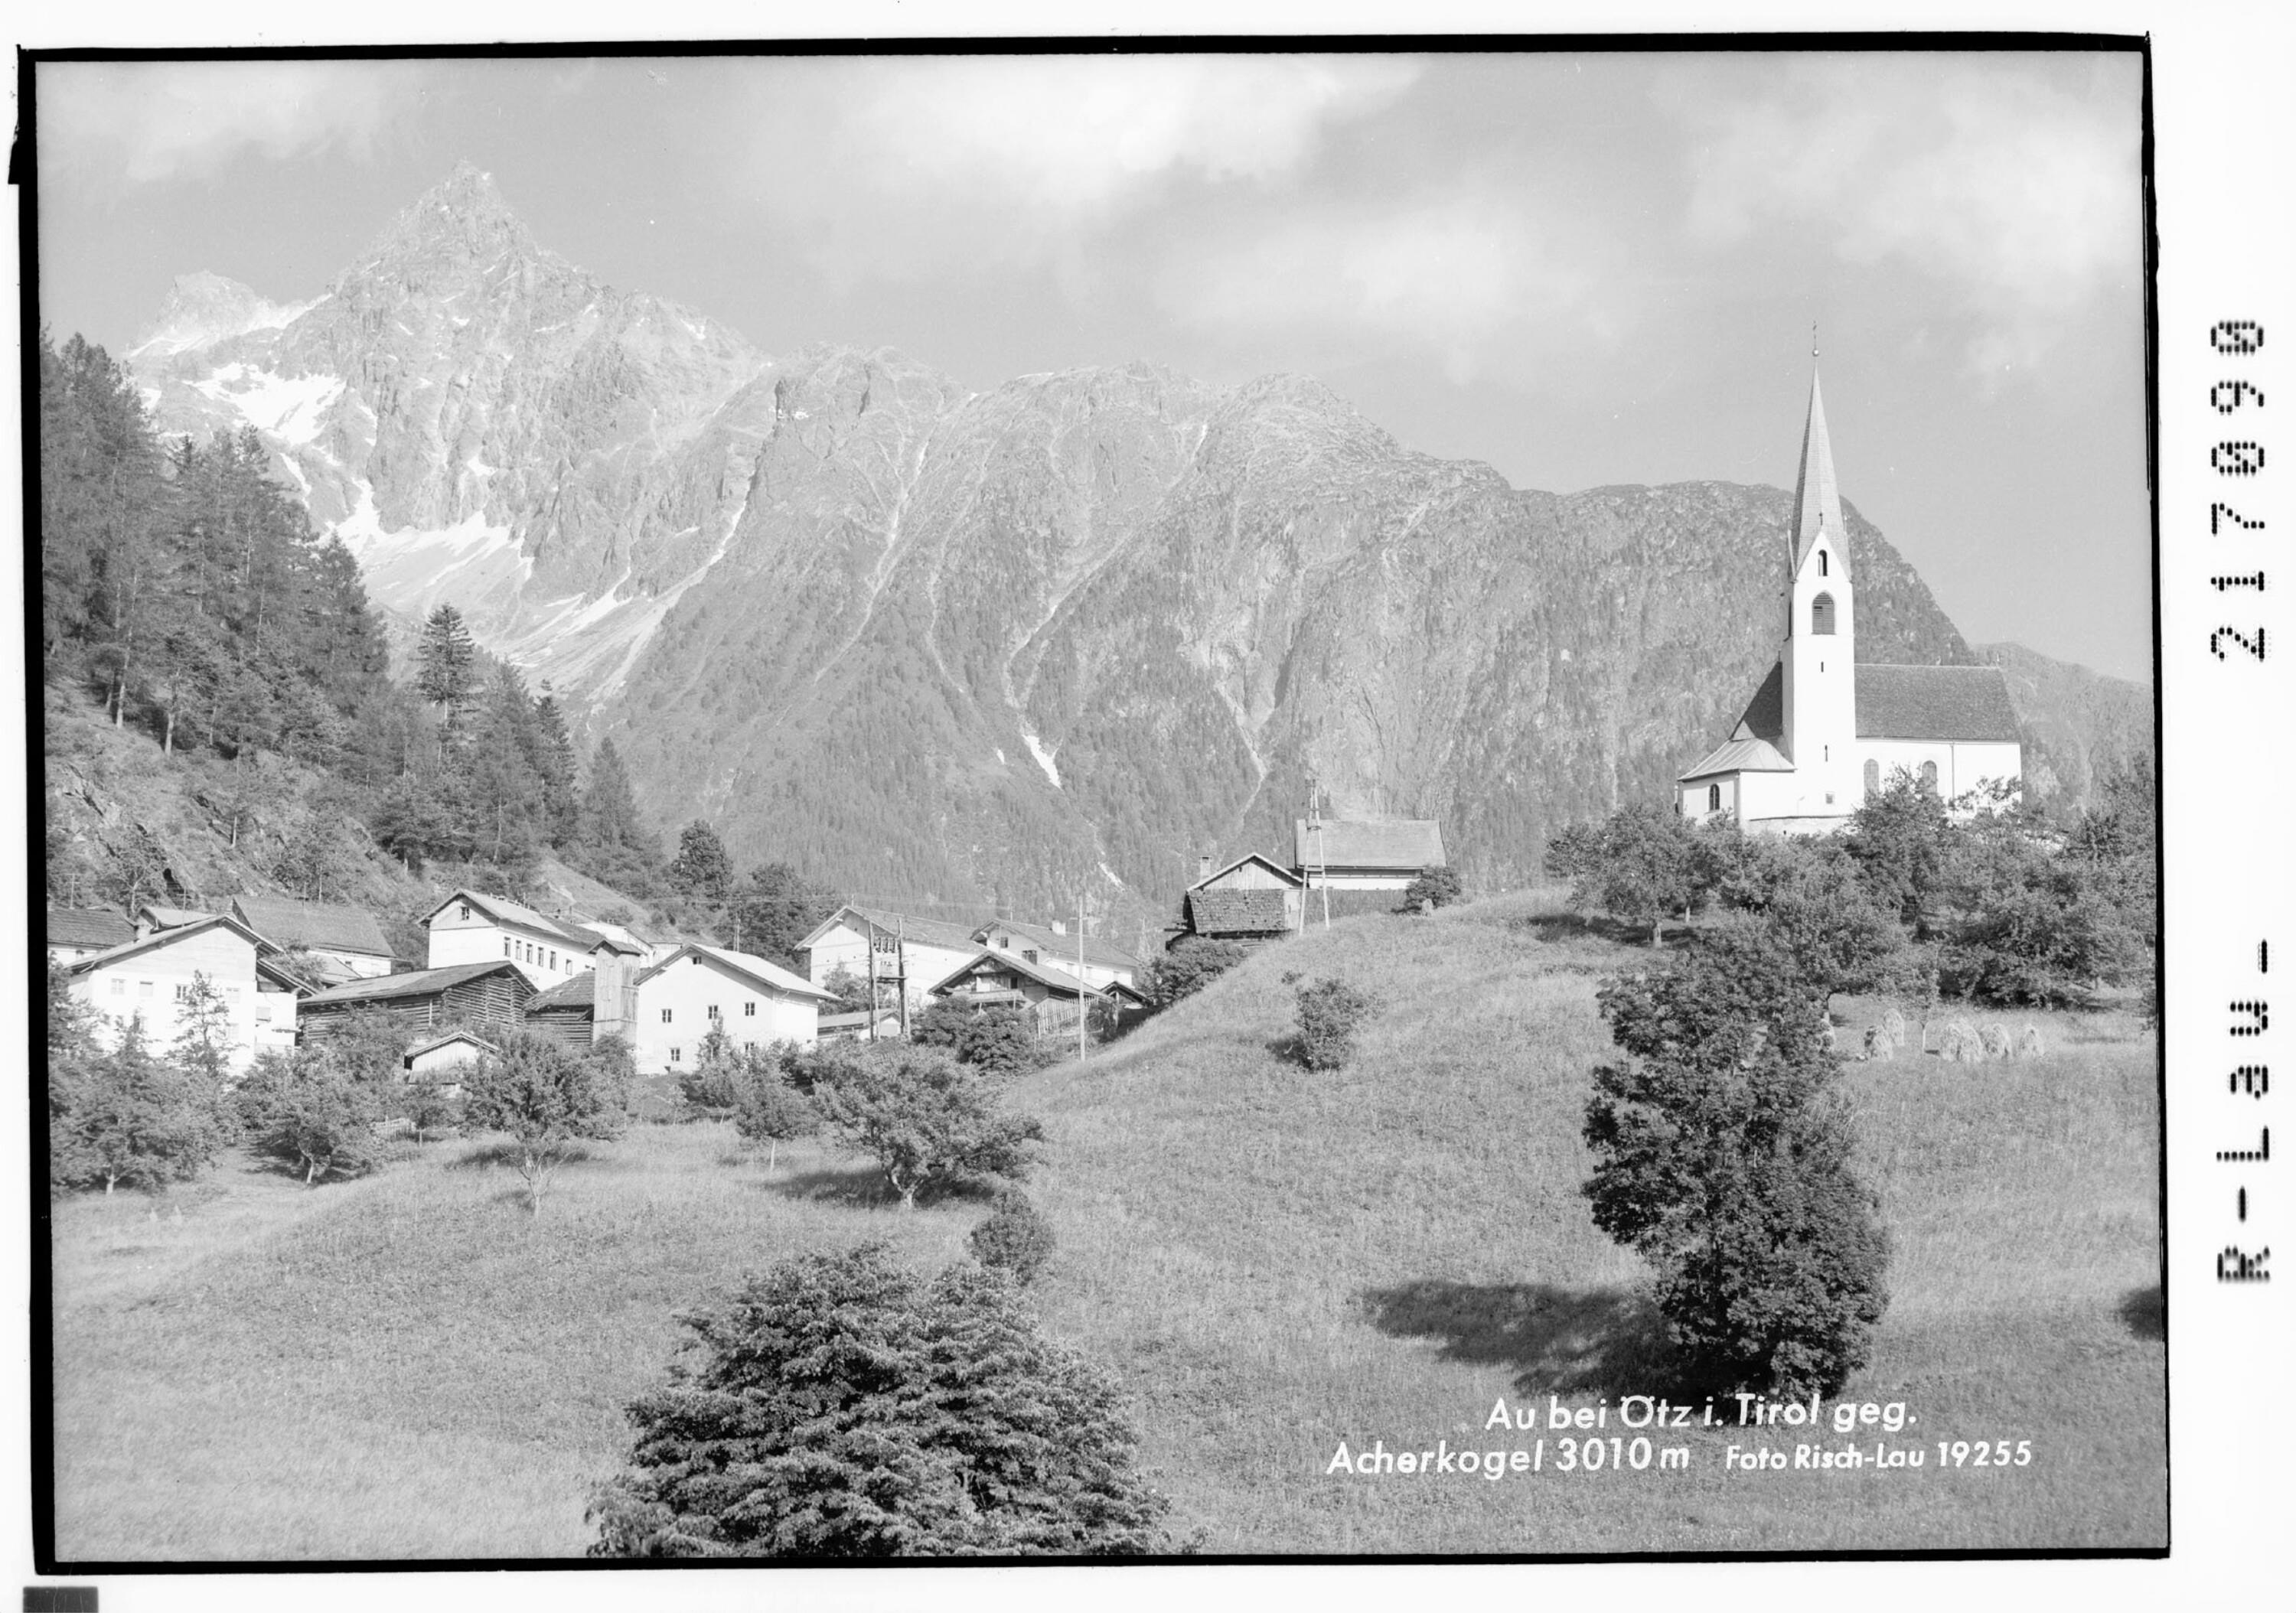 Au bei Ötz in Tirol gegen Acherkogel 3010 m></div>


    <hr>
    <div class=